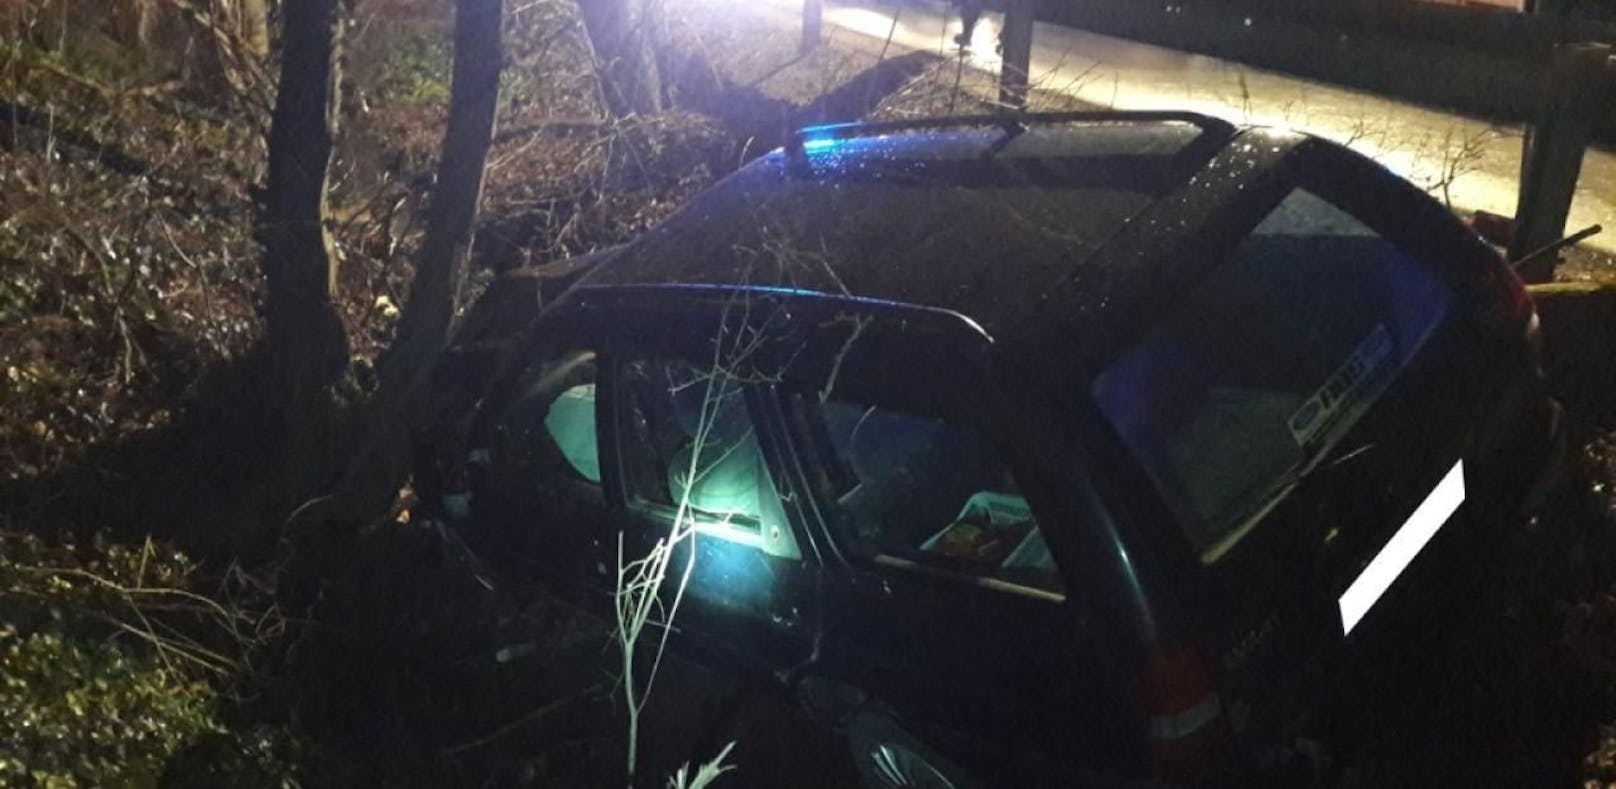 Fahrerflucht bei schwerem Unfall: Auto fällte Baum